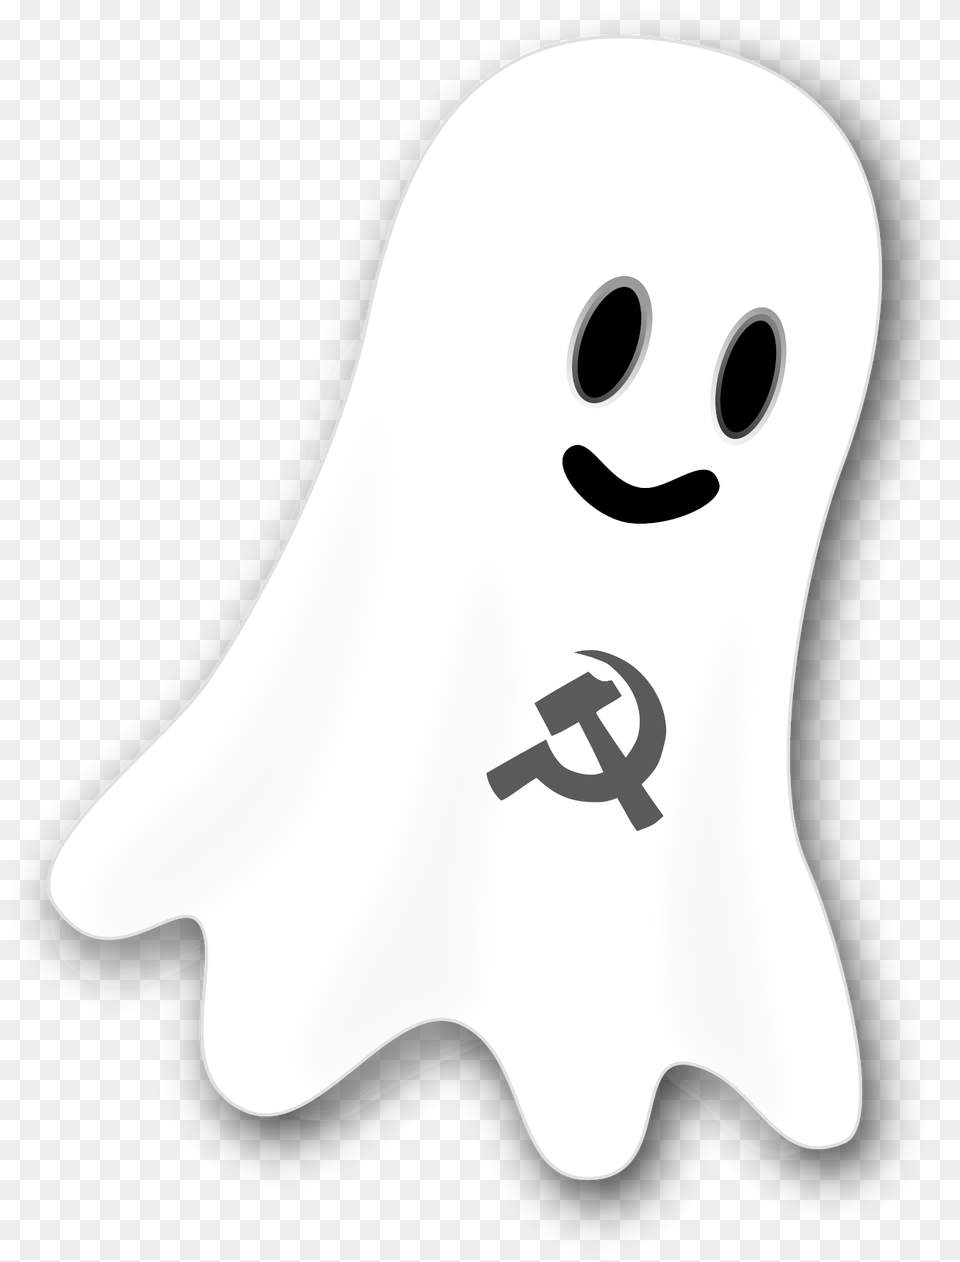 Big Communism Ghost, Stencil, Silhouette Png